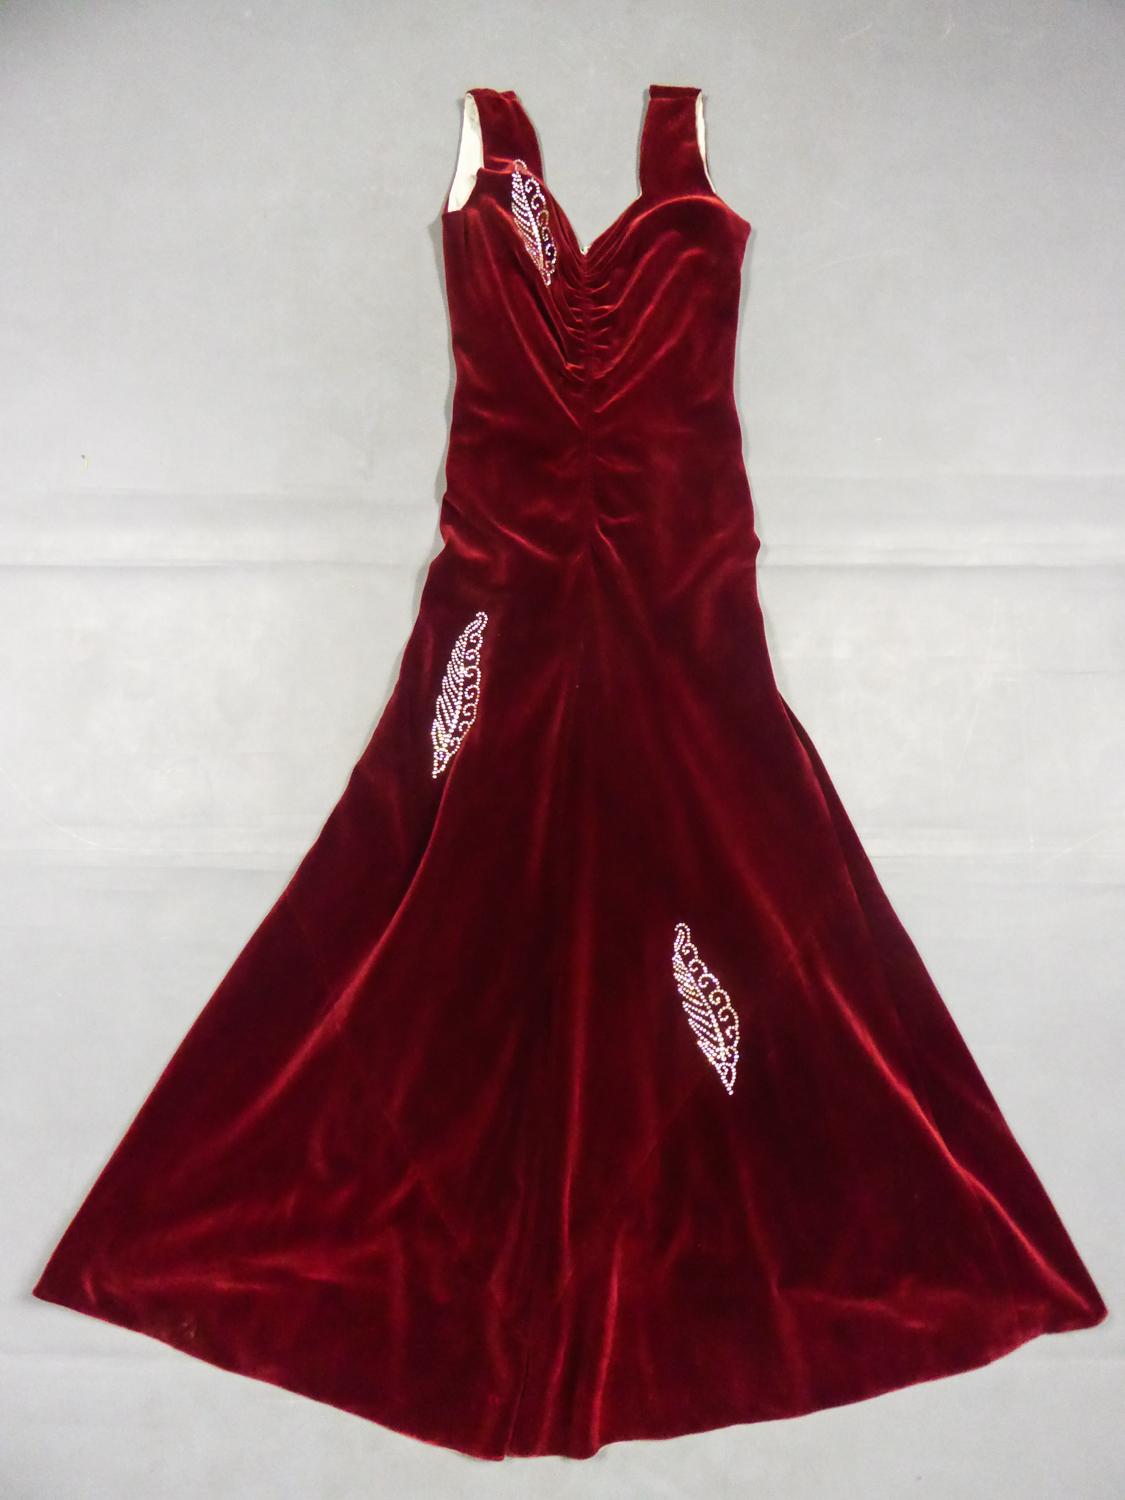 A Nicole Groult / Paul Poiret Evening Dress in Velvet and Rhinestones Circa 1935 For Sale 6